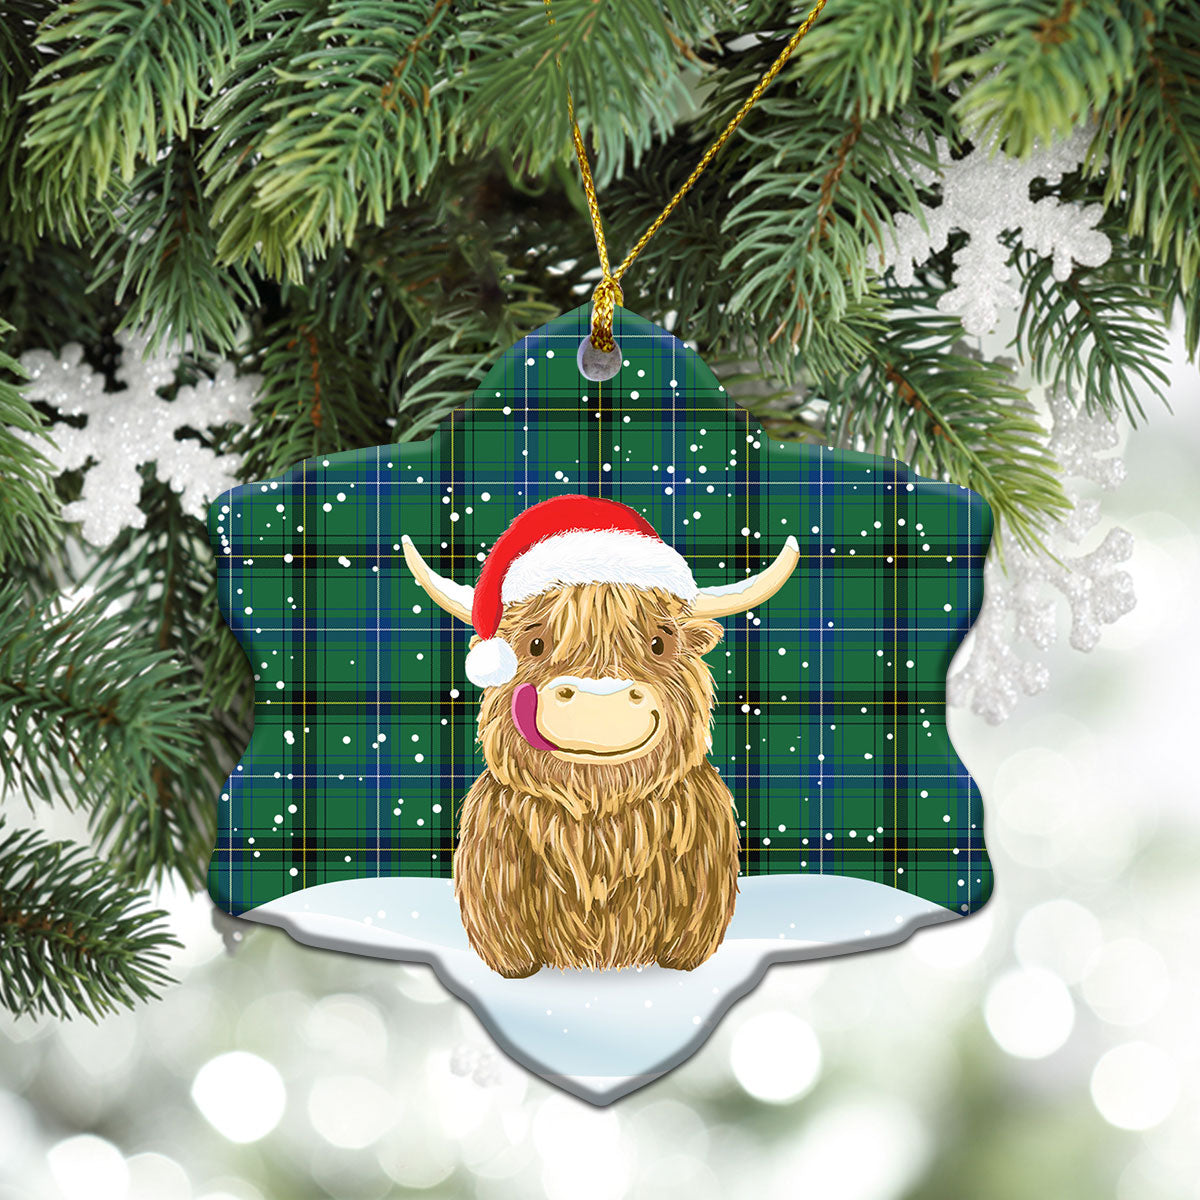 Henderson Ancient Tartan Christmas Ceramic Ornament - Highland Cows Style